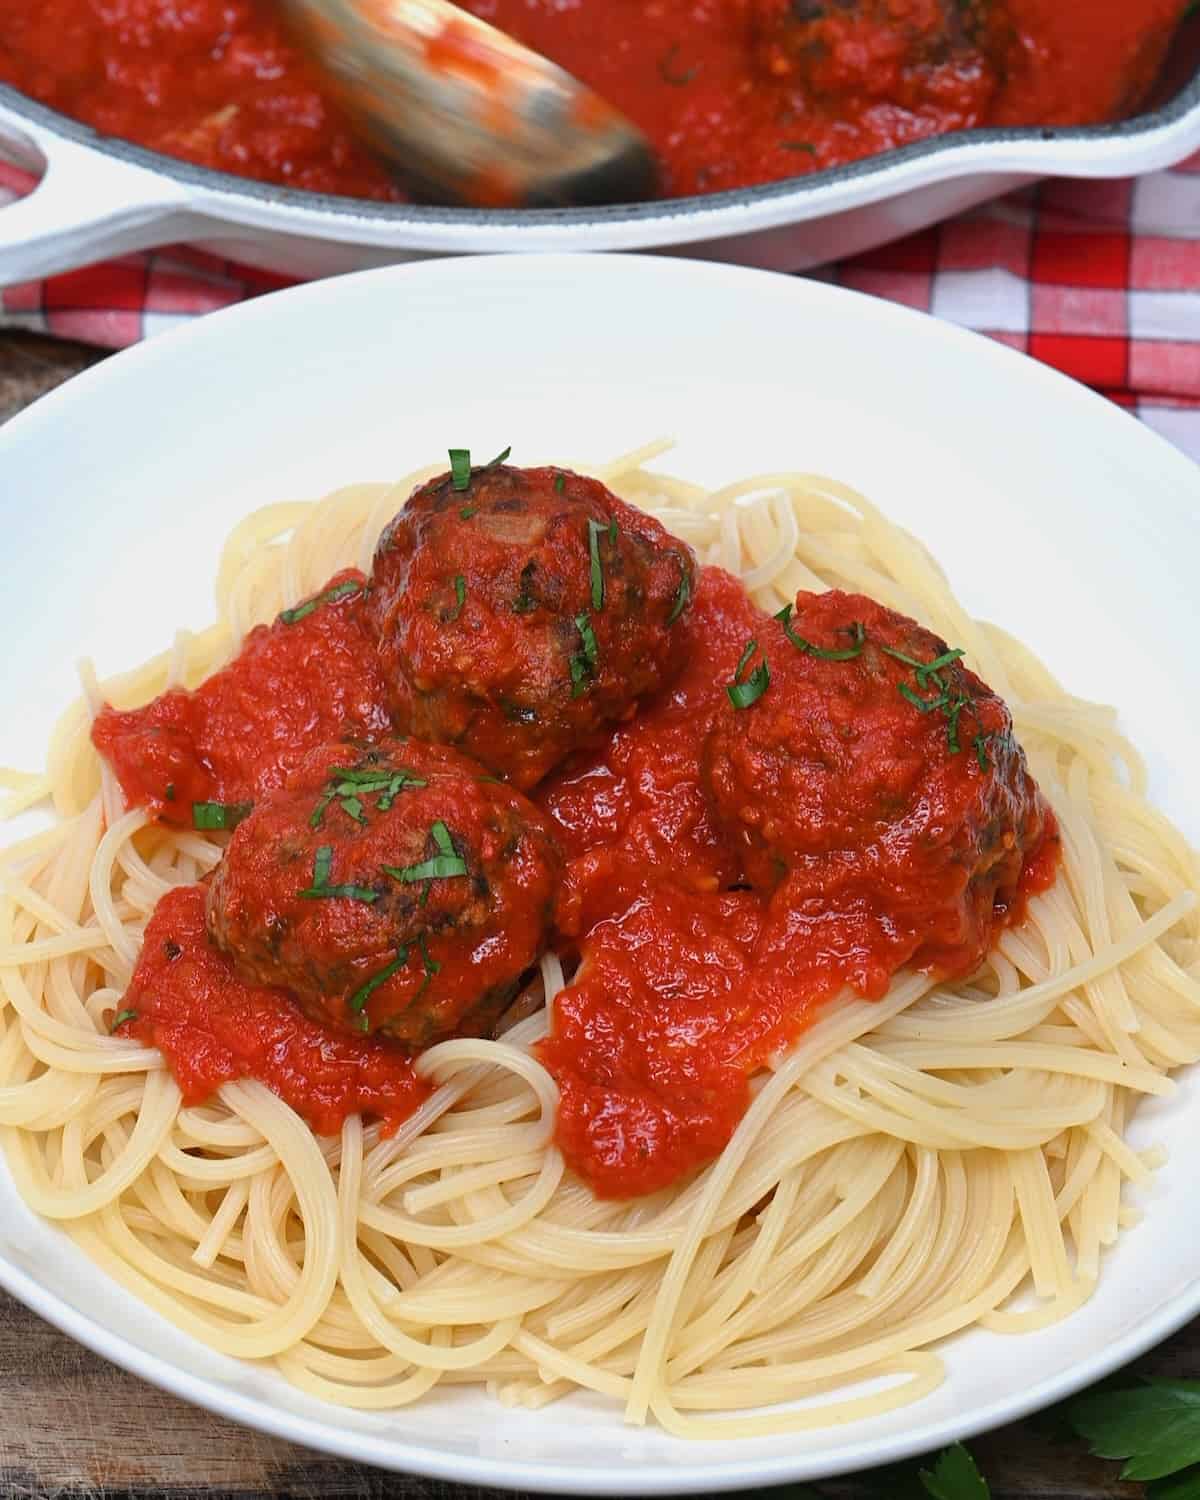 A serving of spaghetti with Italian meatballs in marinara sauce